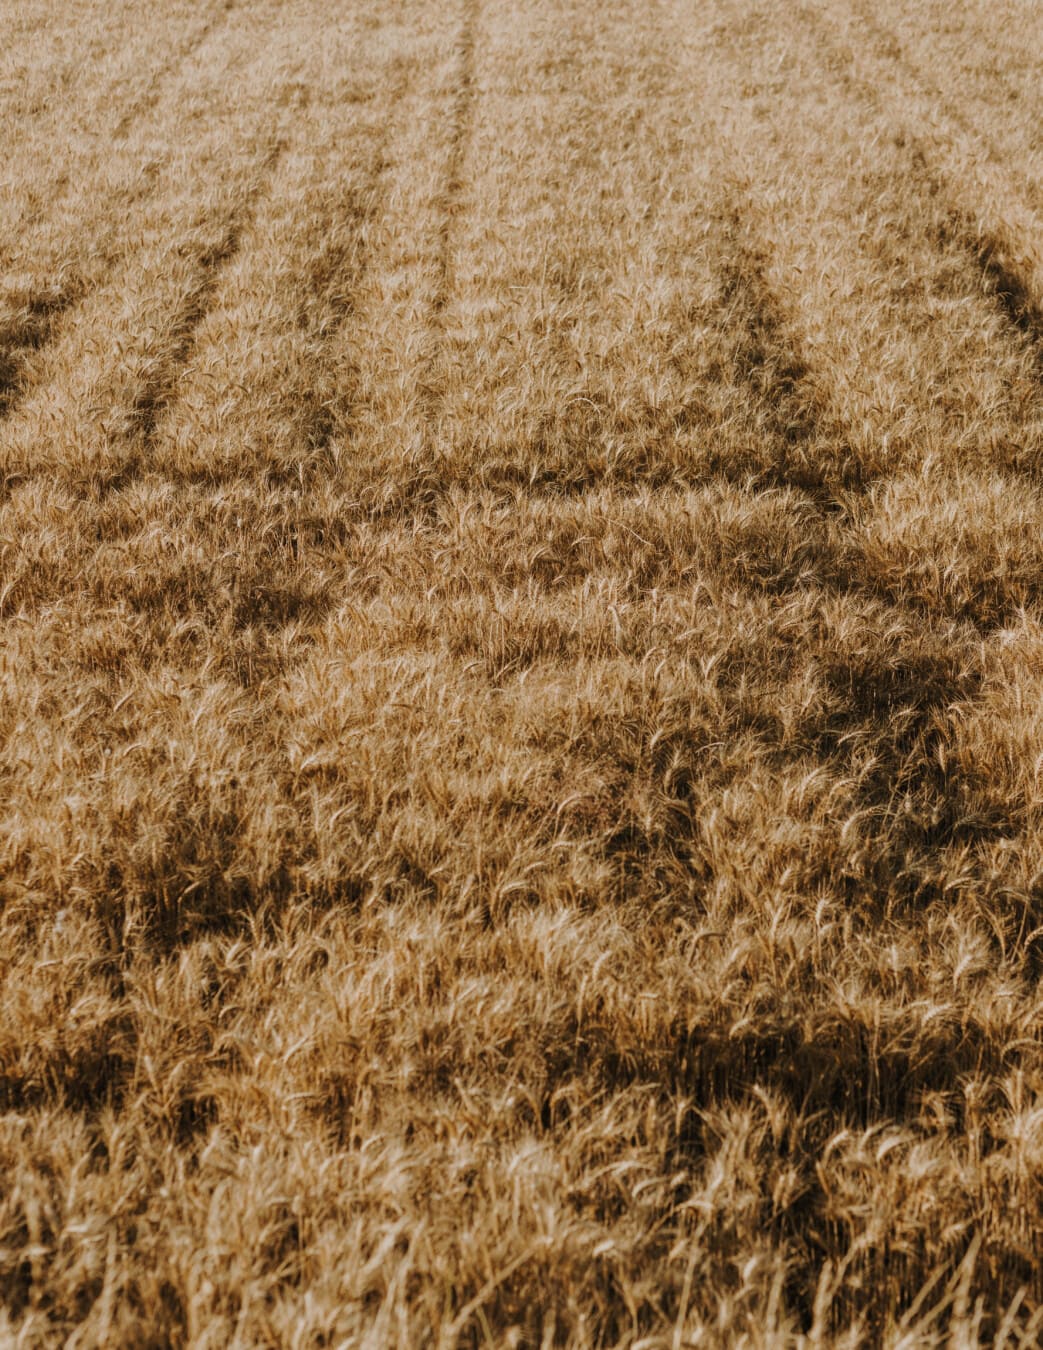 flat field, farmland, barley, organic, agriculture, production, field, straw, rural, cereal